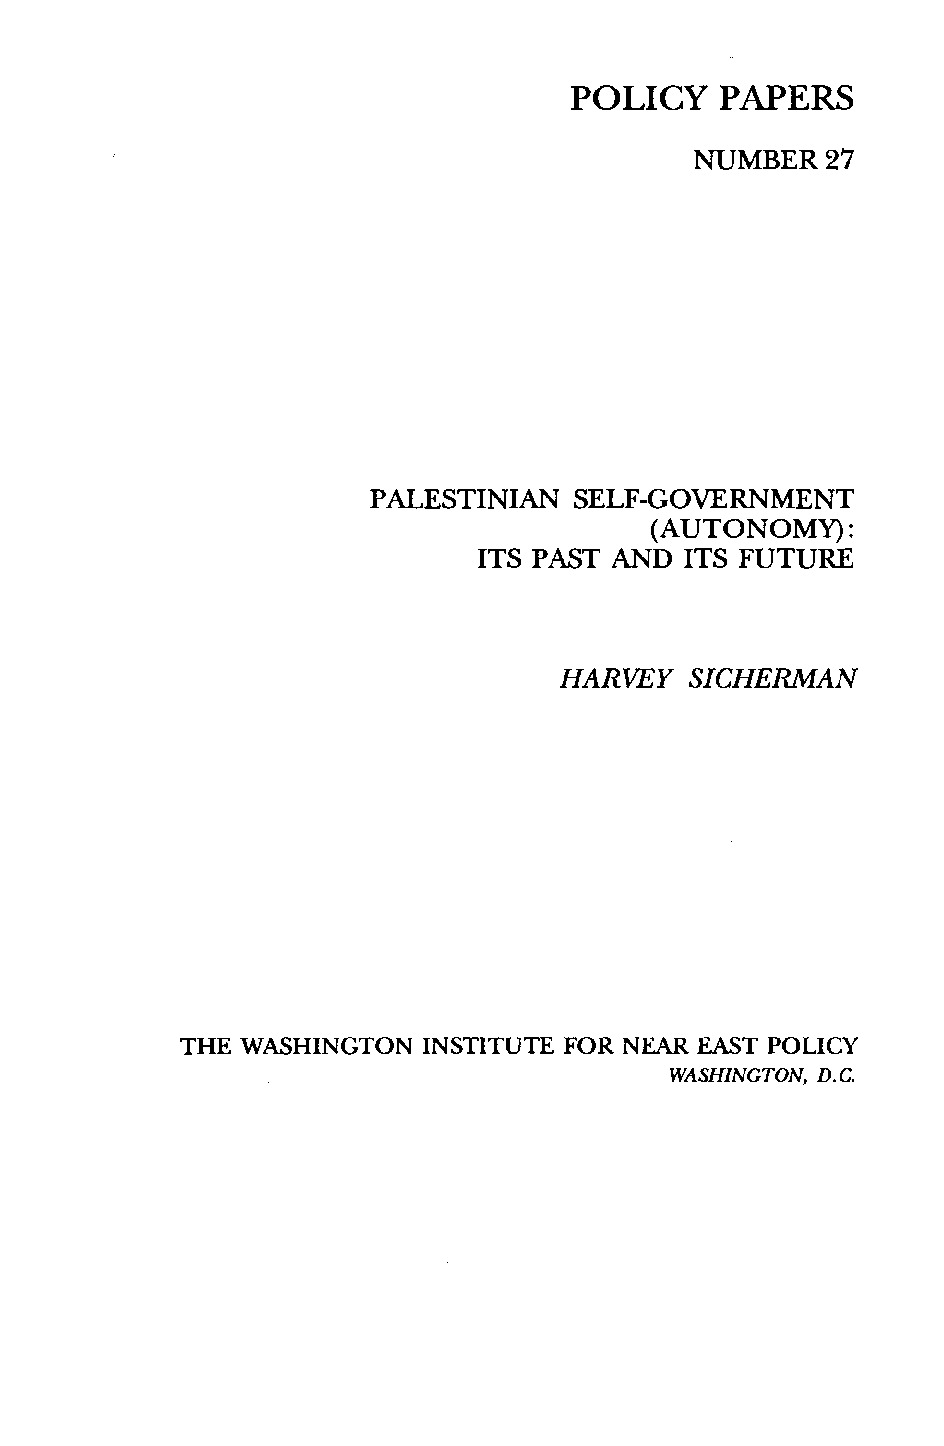 PP_27_PalestinianSelf-Government.pdf